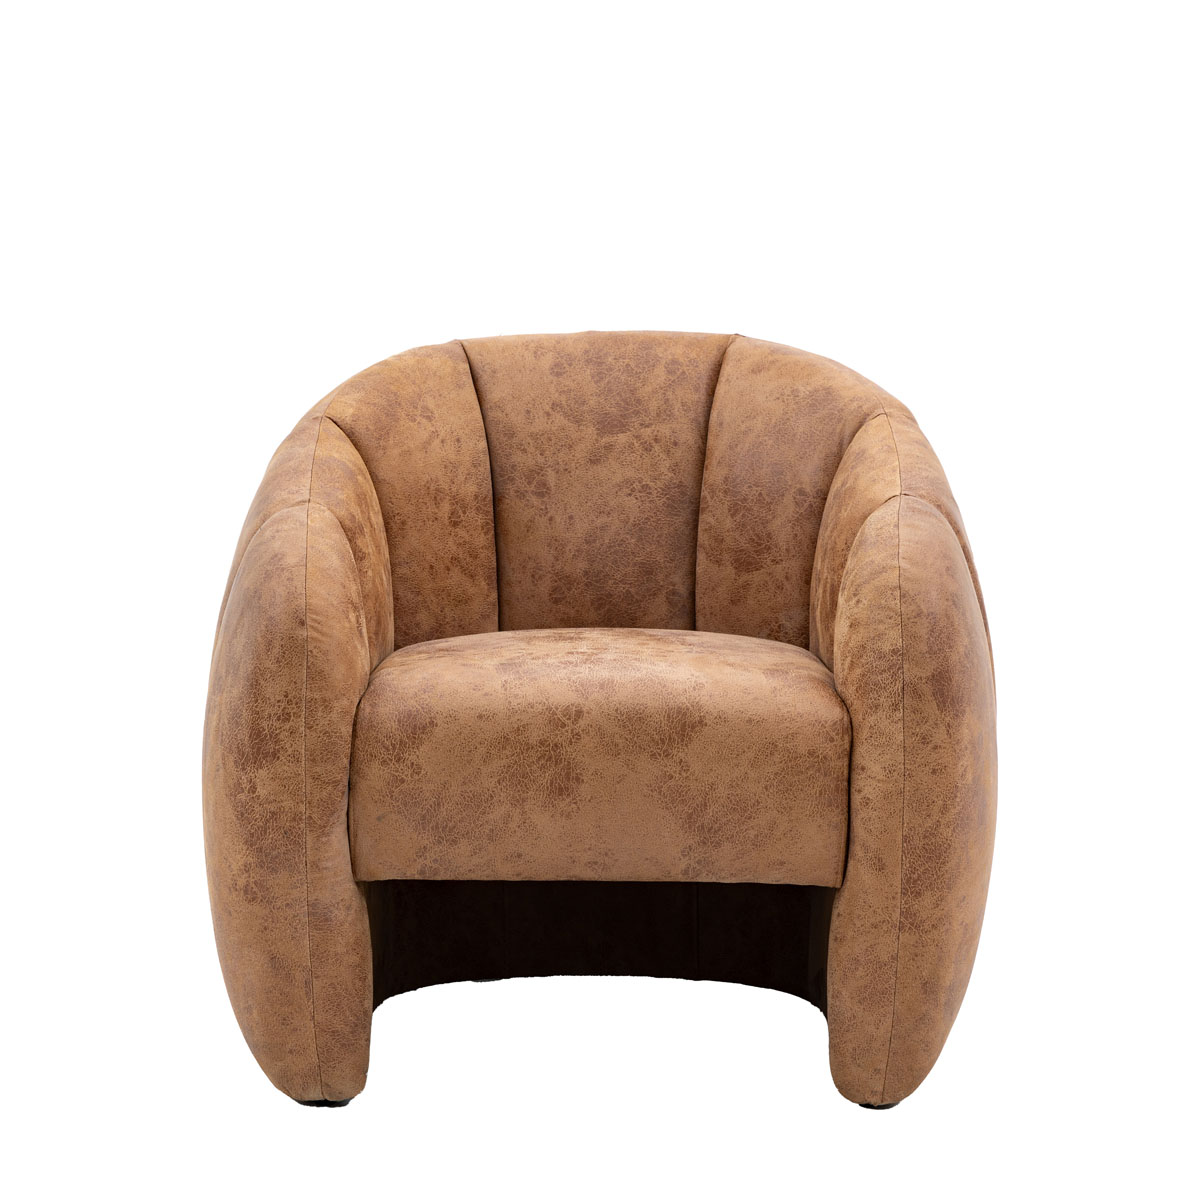 Atella Tub Chair Antique Tan Leather 780x810x740mm